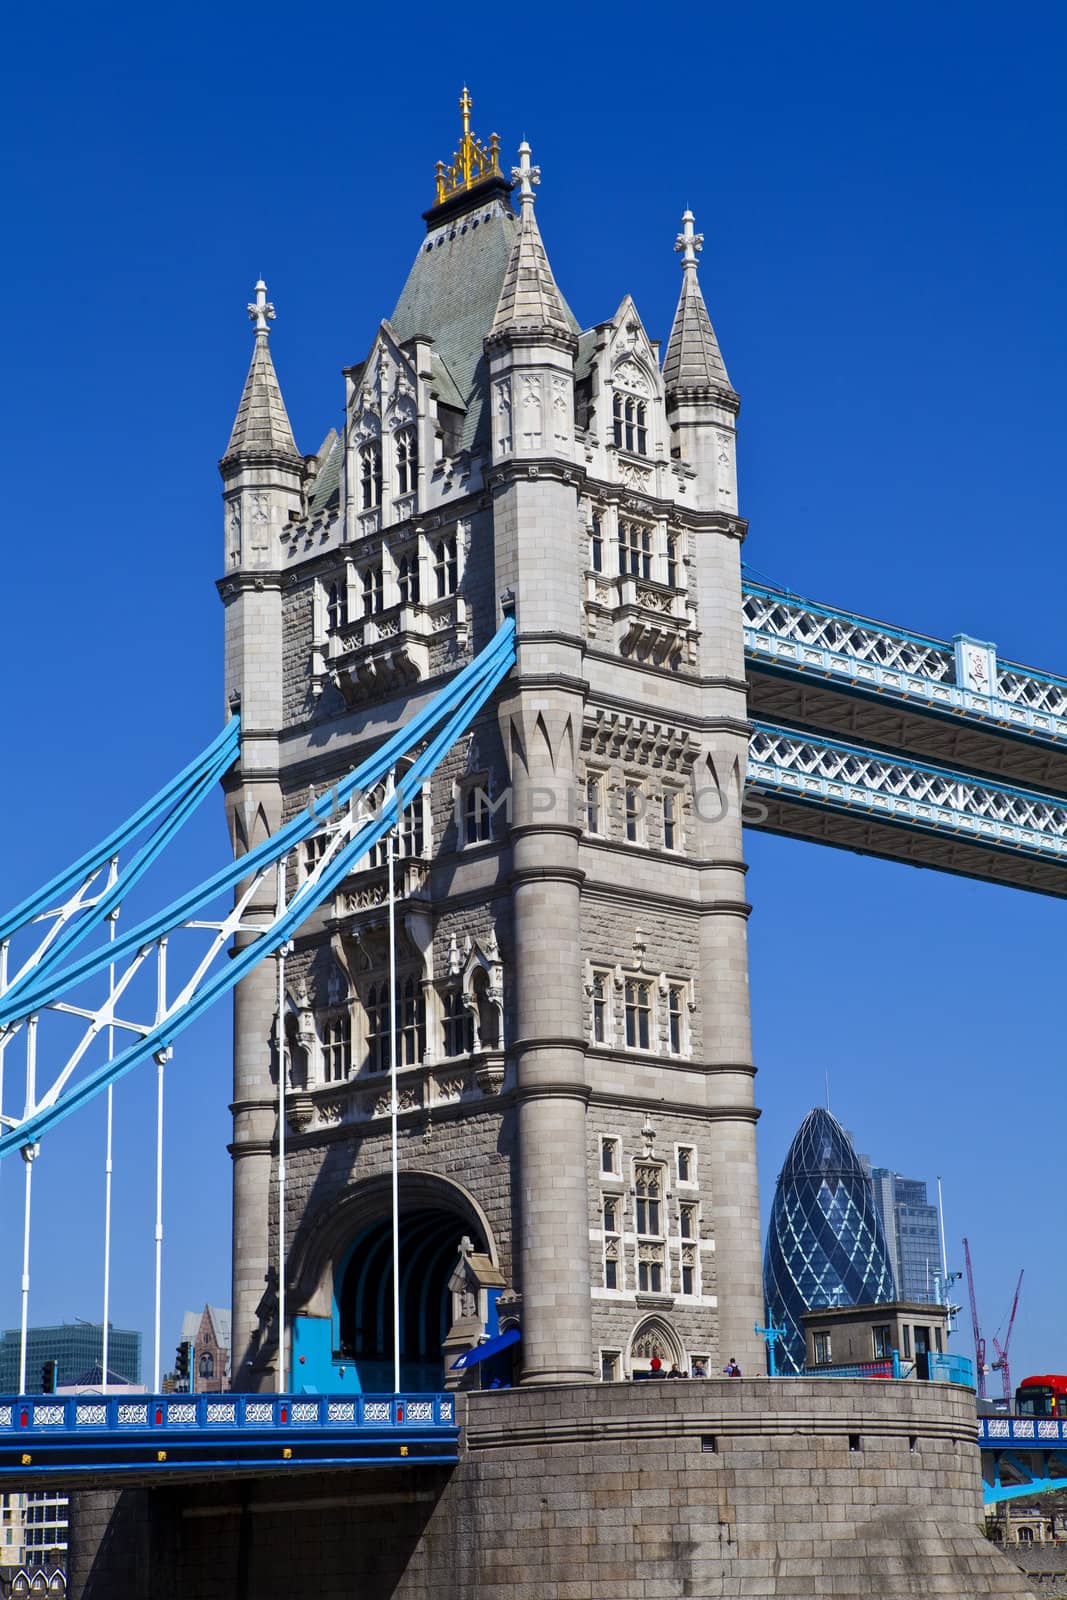 Tower Bridge in London with the Gherkin in London.